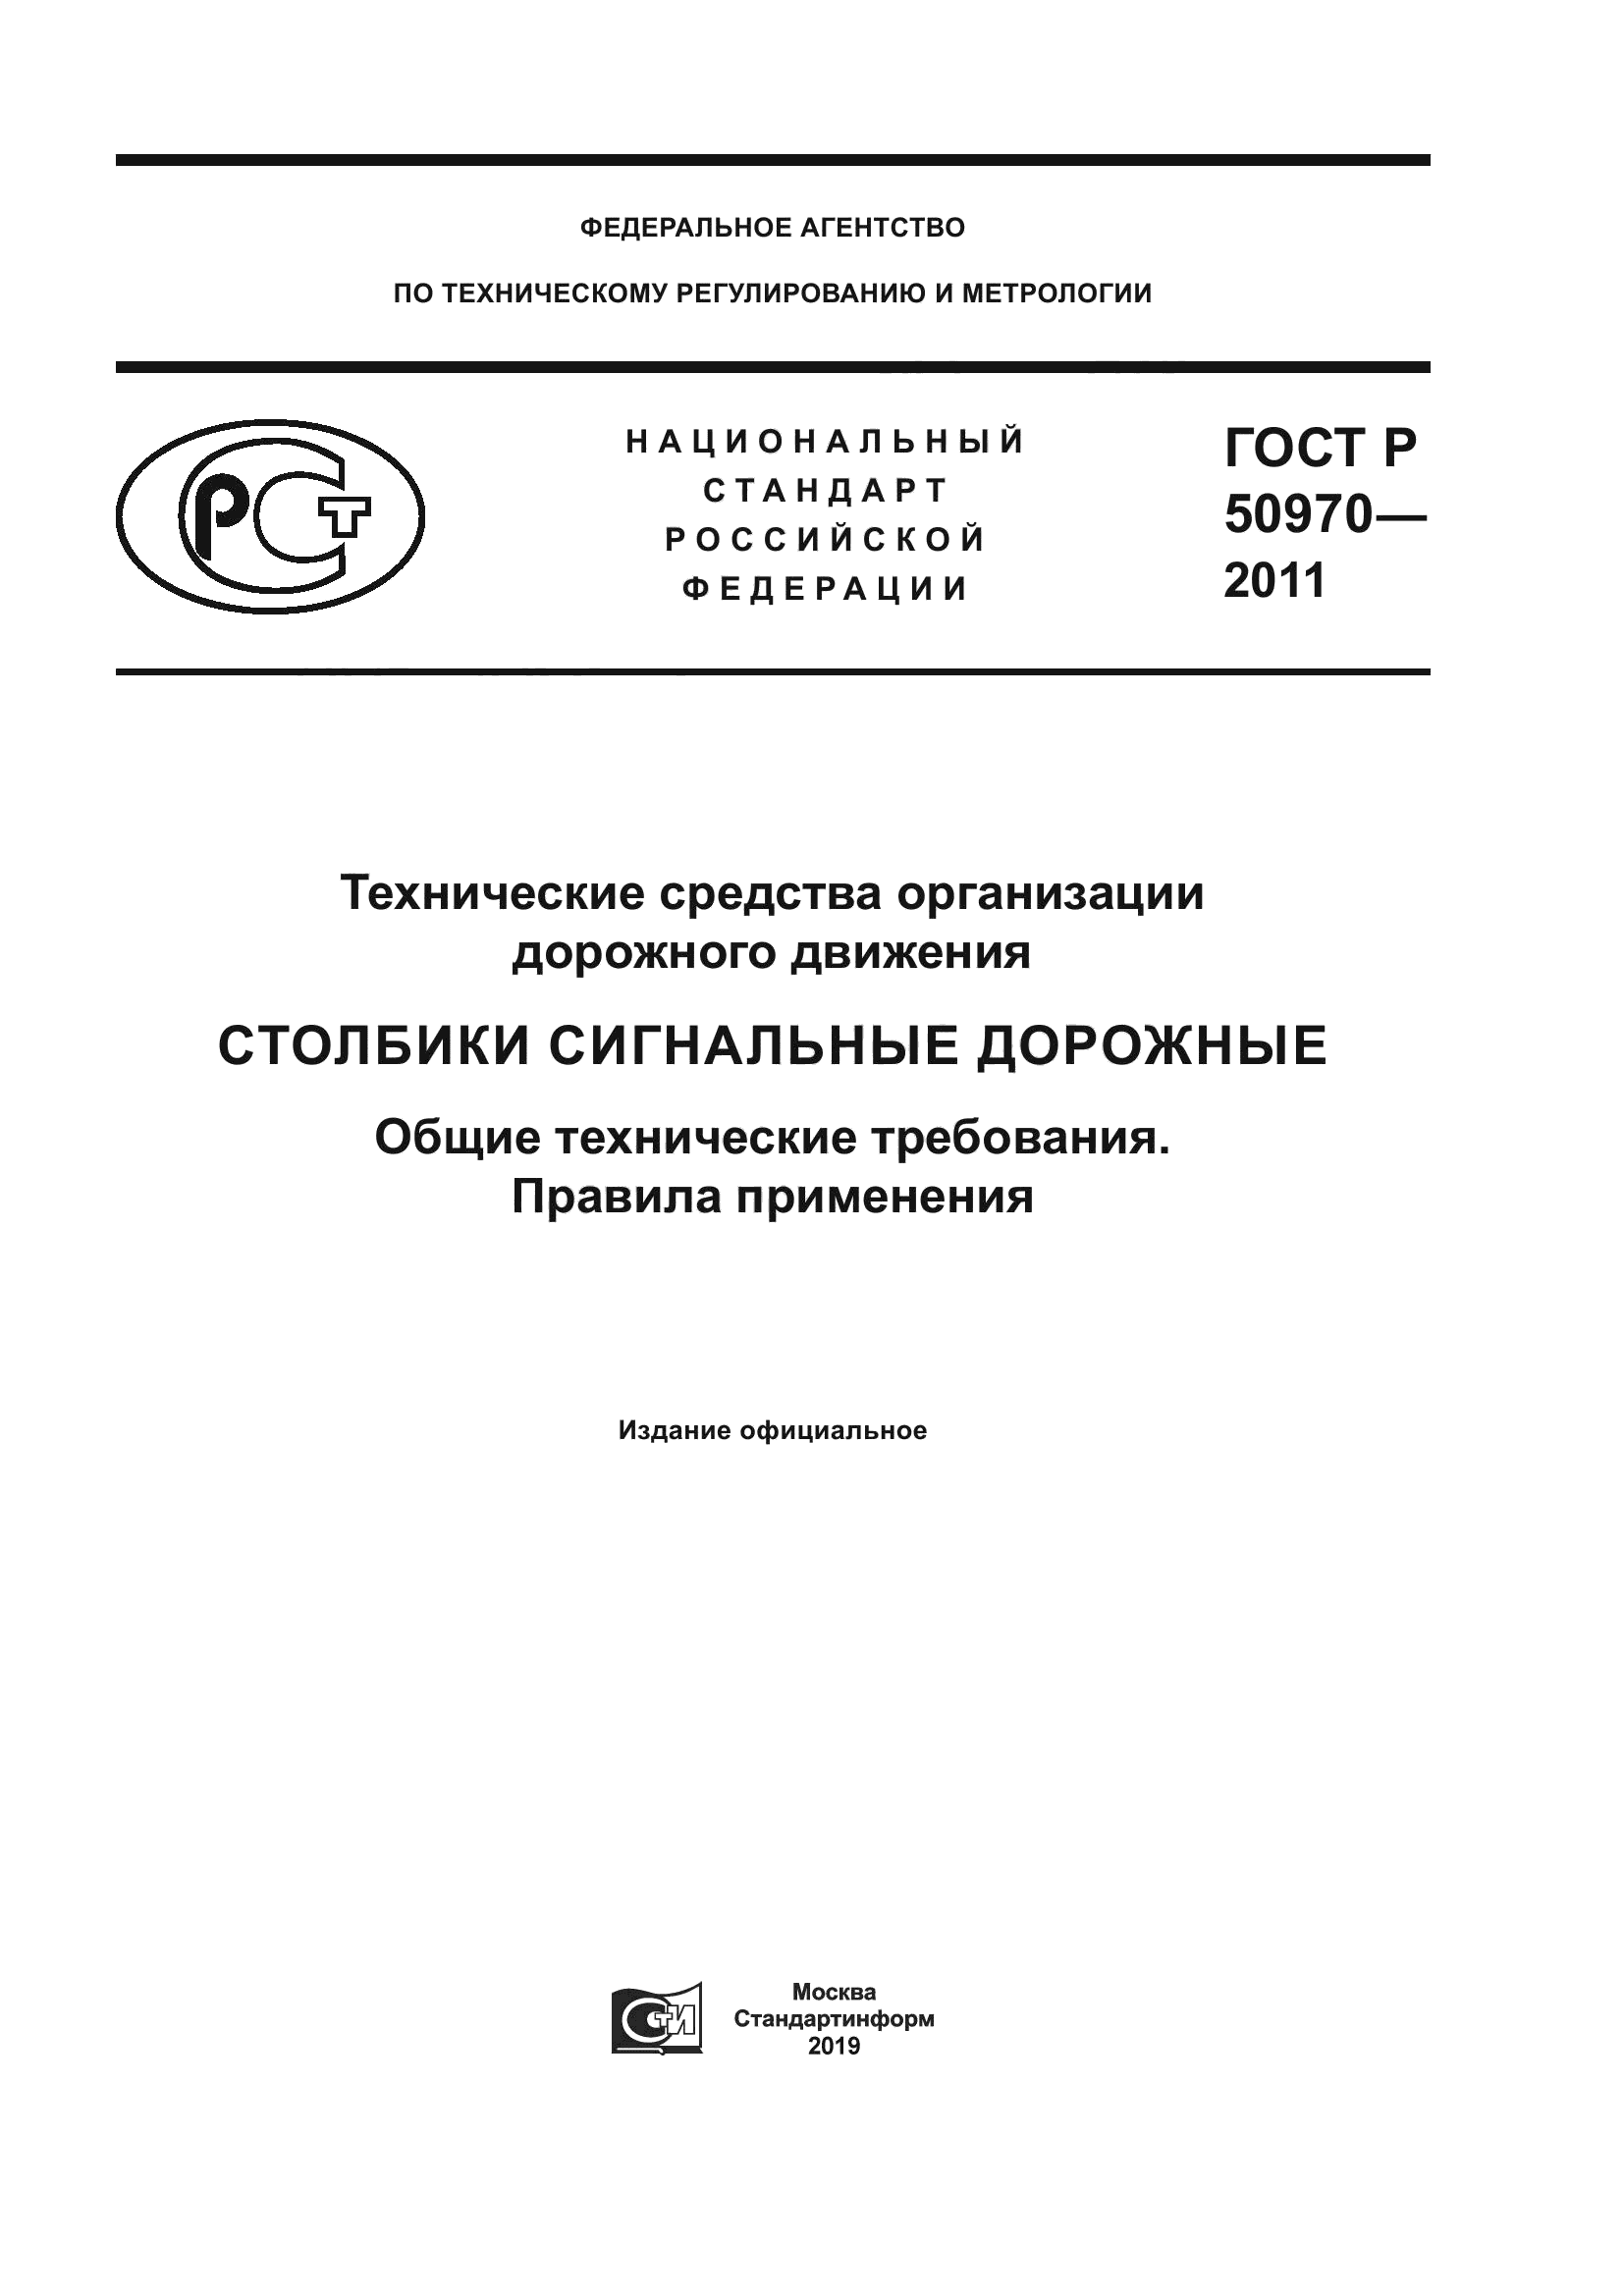 ГОСТ Р 50970-2011